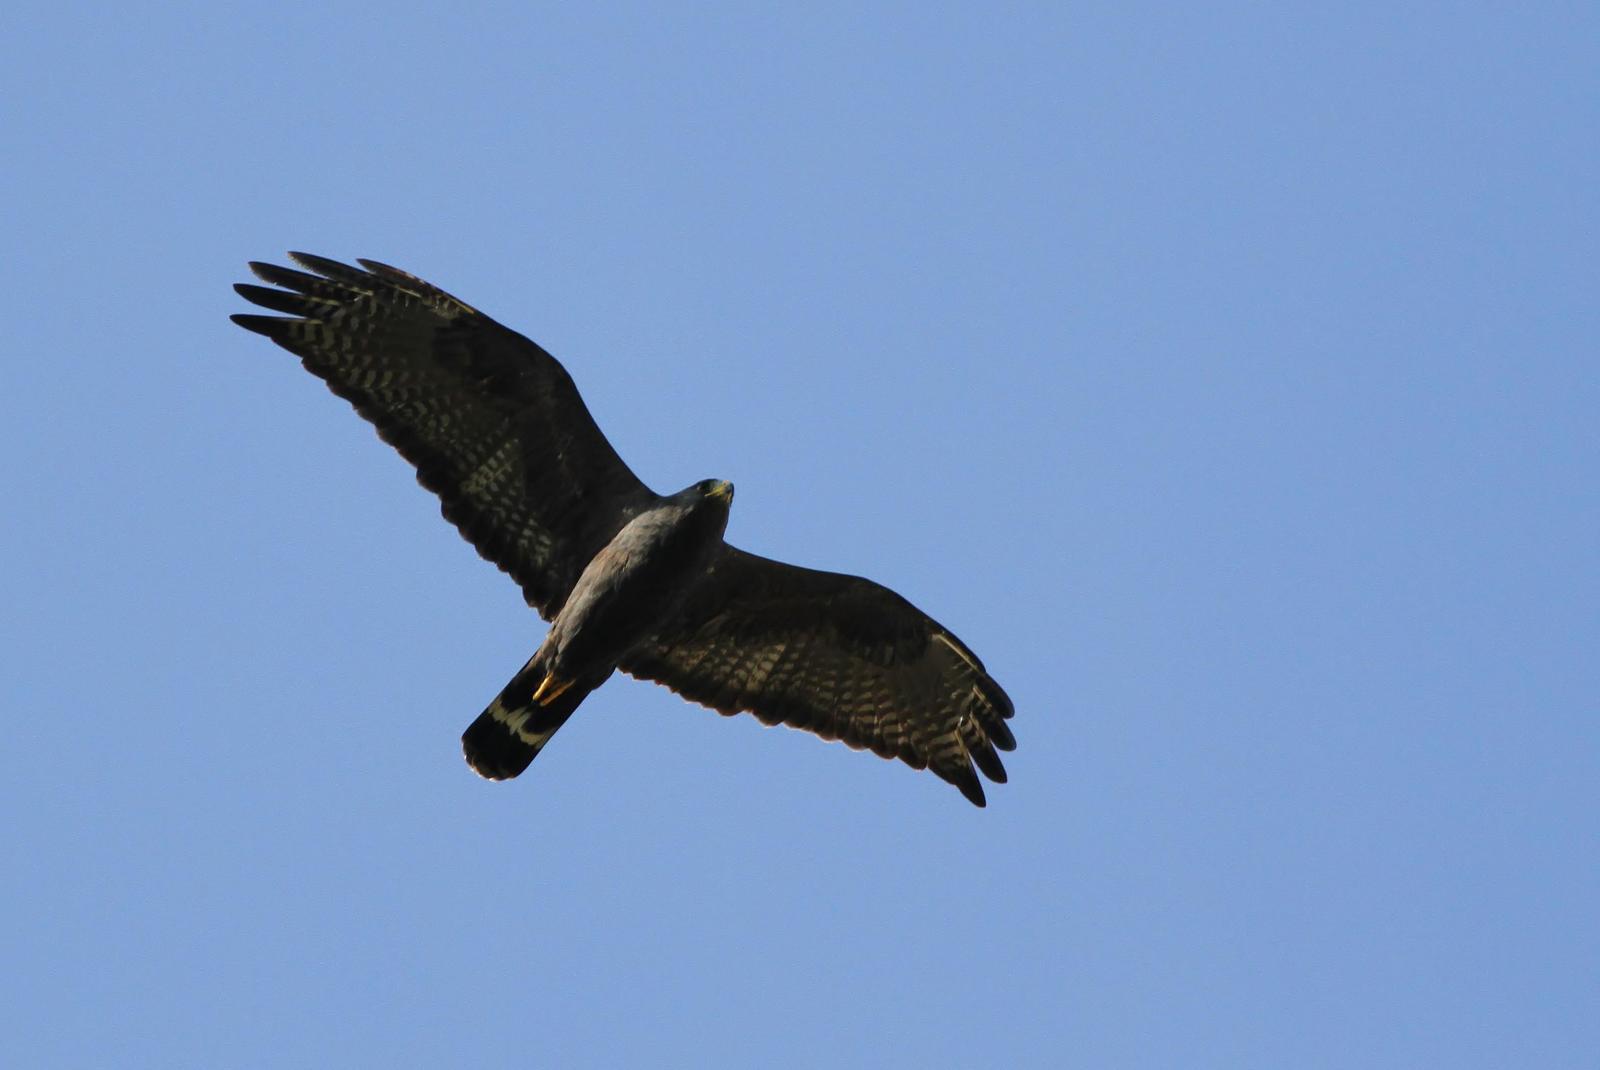 Zone-tailed Hawk Photo by Alex Lamoreaux